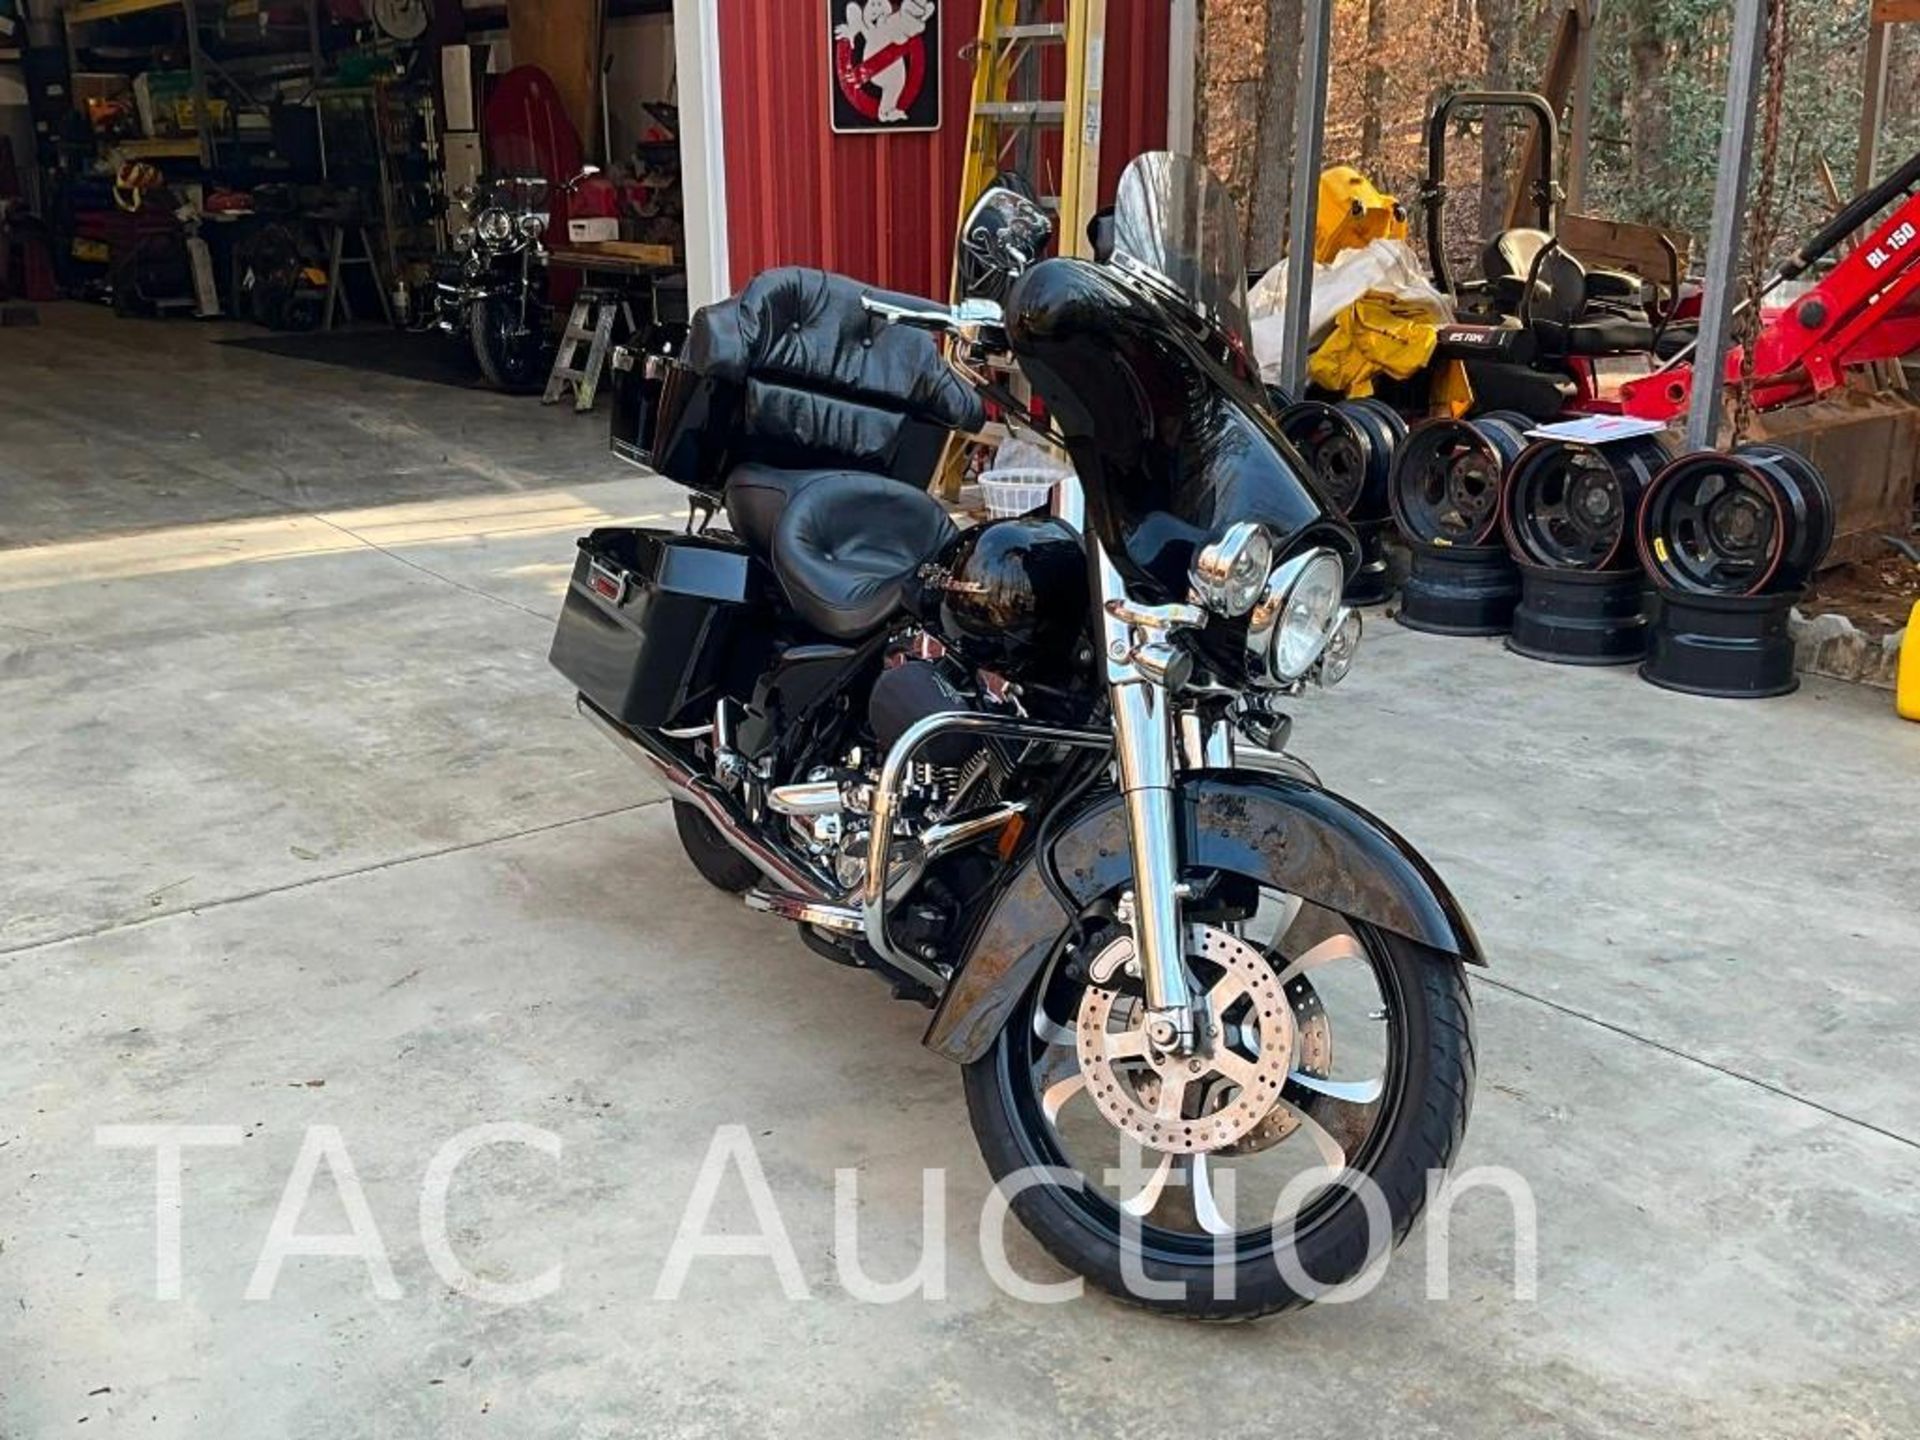 2007 Harley Davidson Street Glide Motorcycle - Image 3 of 36